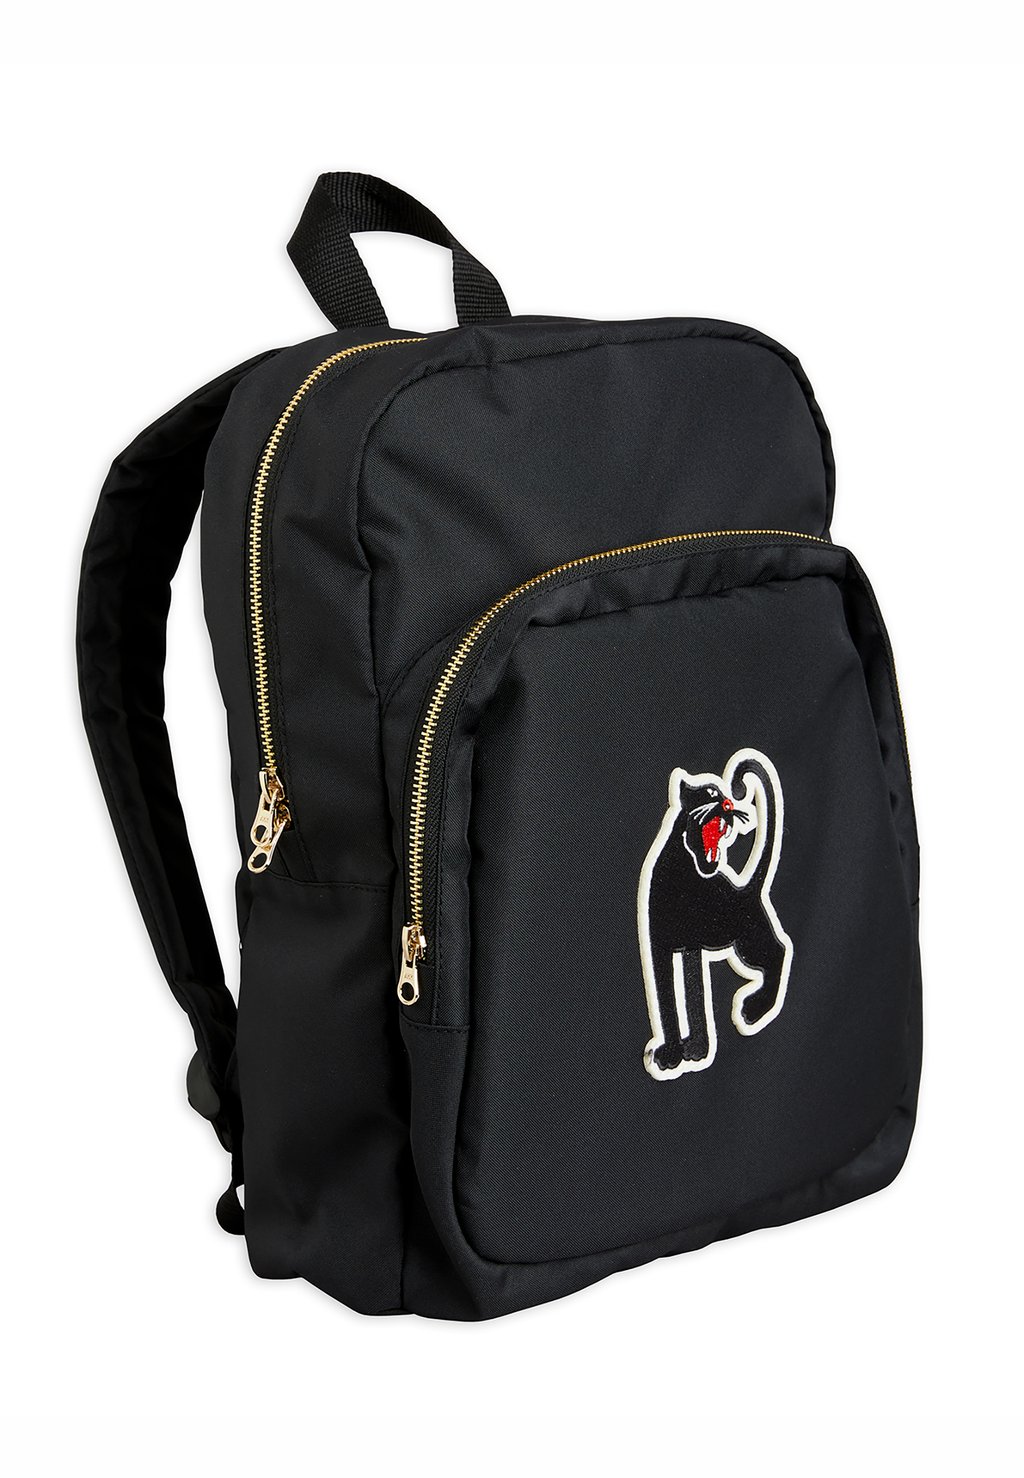 Рюкзак для путешествий Panther Backpack Unisex Mini Rodini, черный рюкзак для путешествий backpack mio unisex molo цвет blue horses